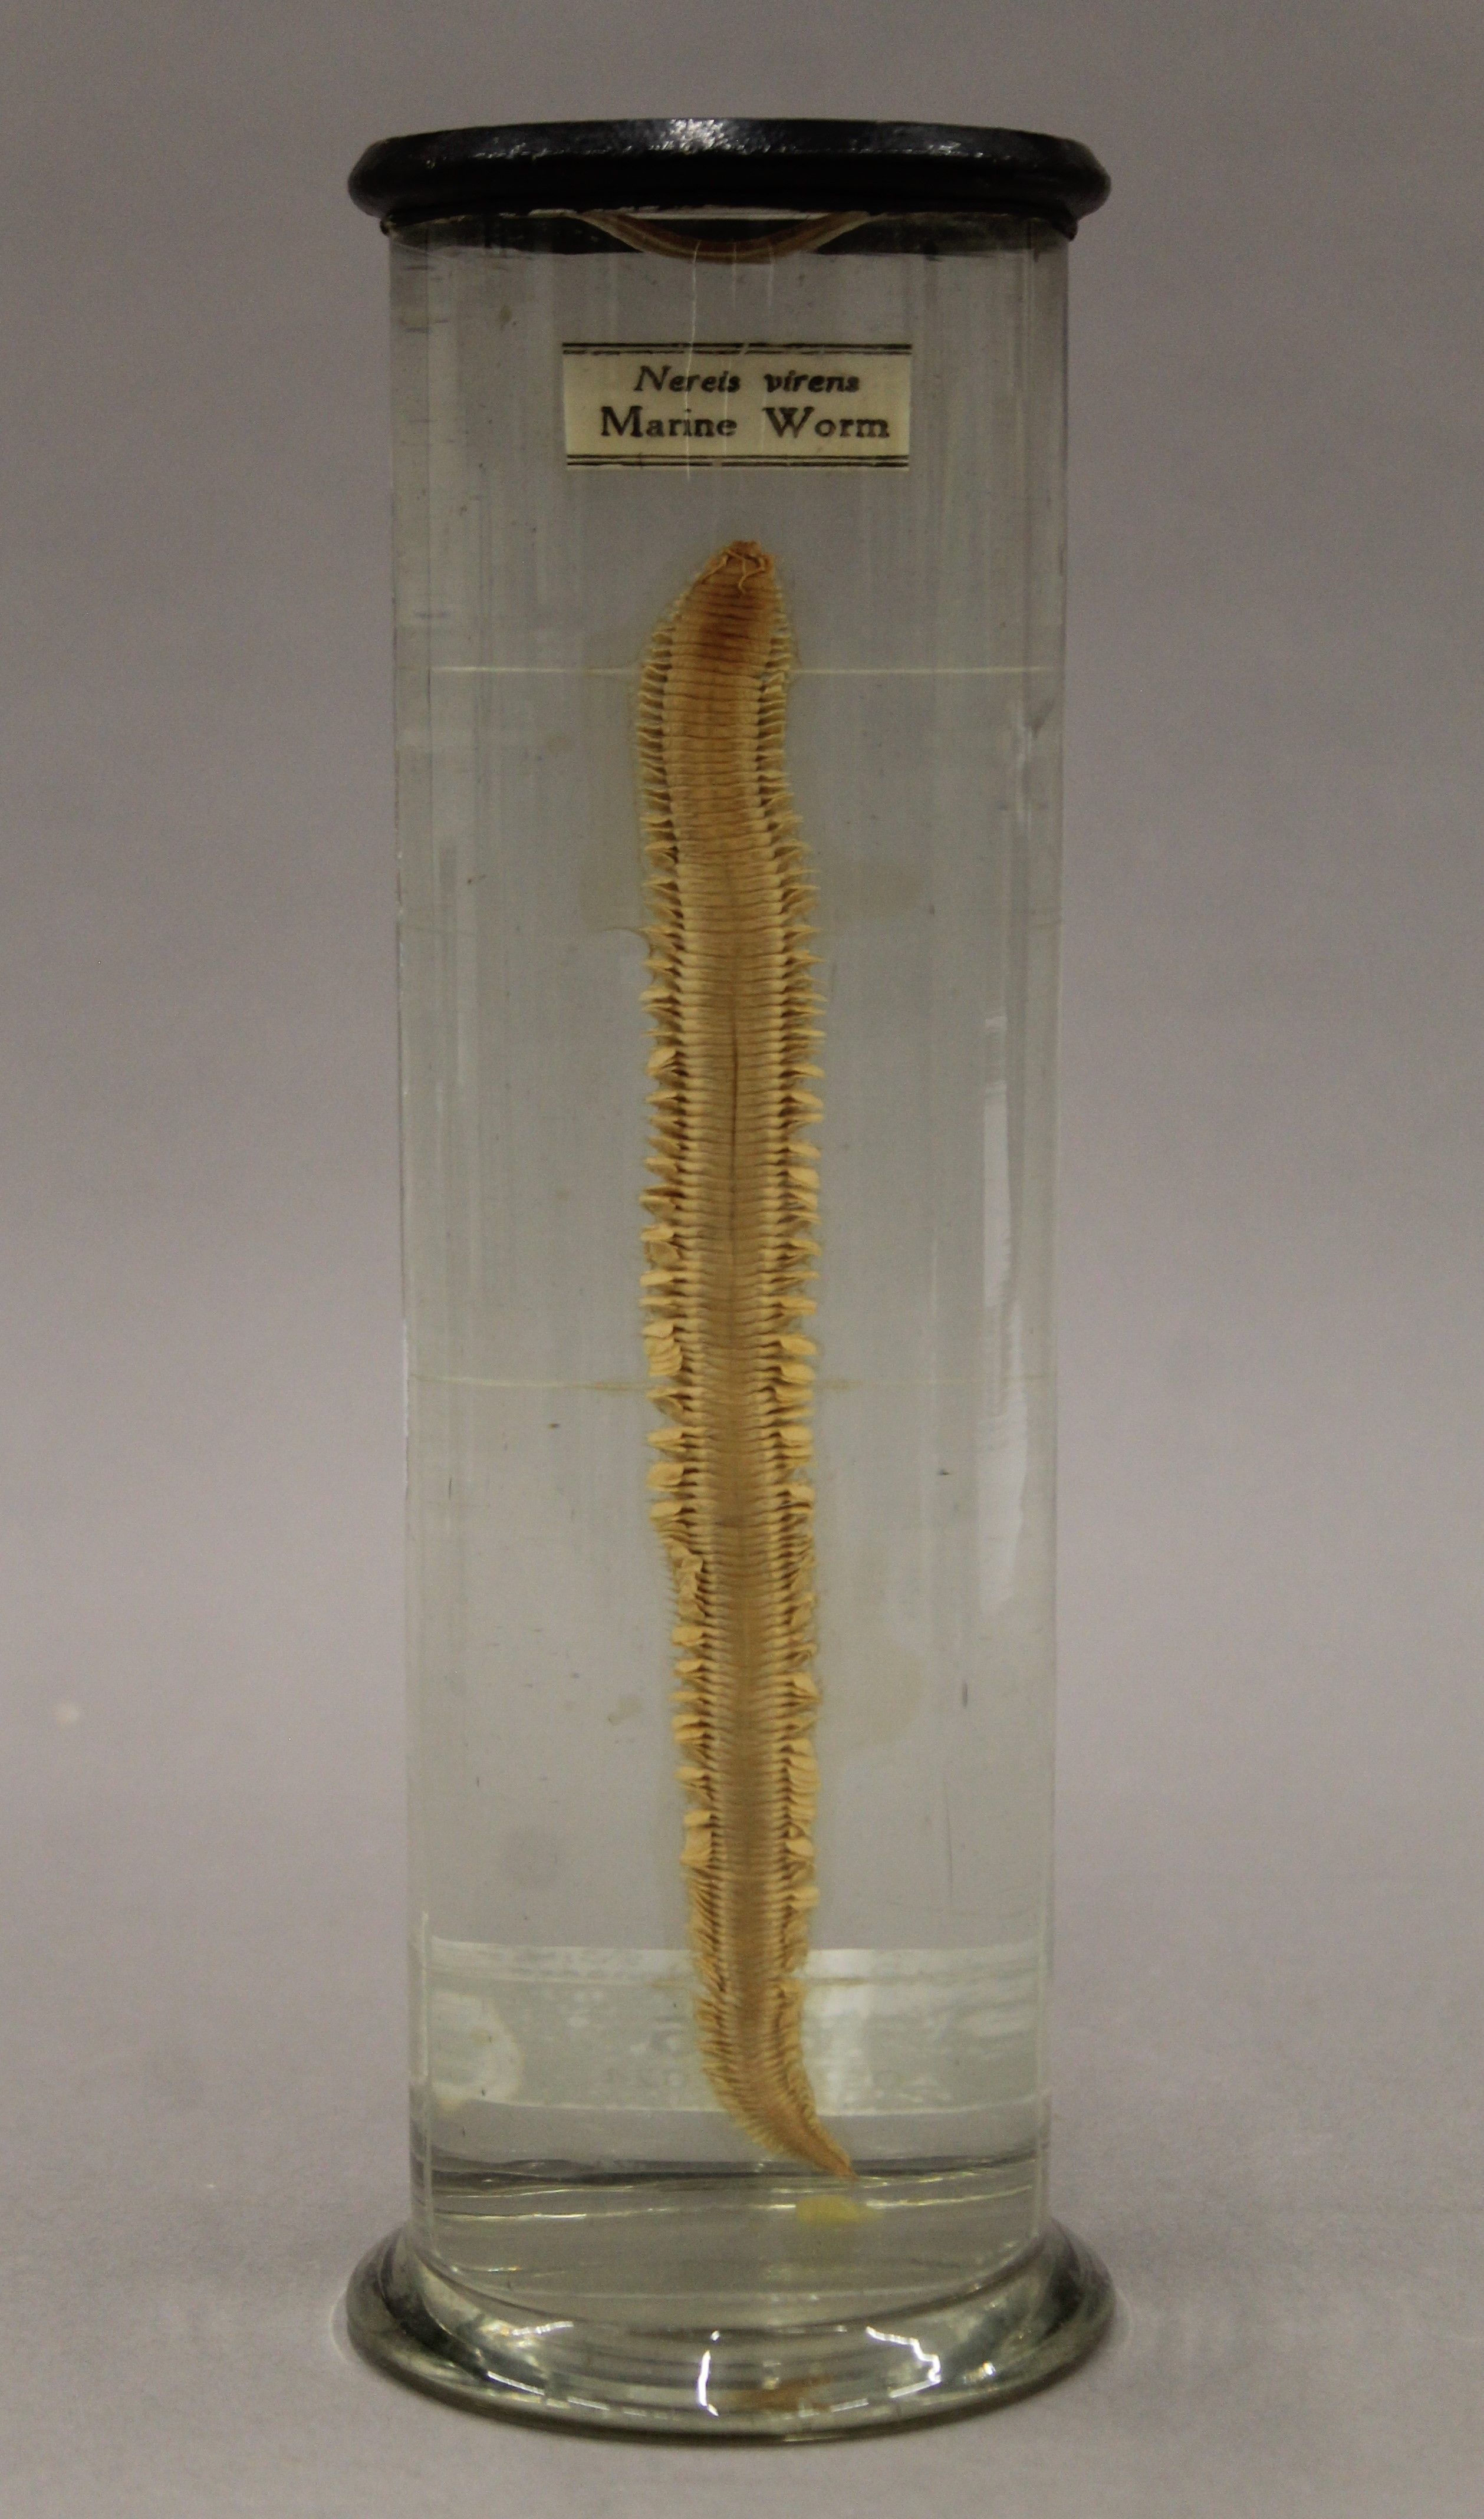 A jar containing a marine worm specimen in preservative fluid. 25 cm high.